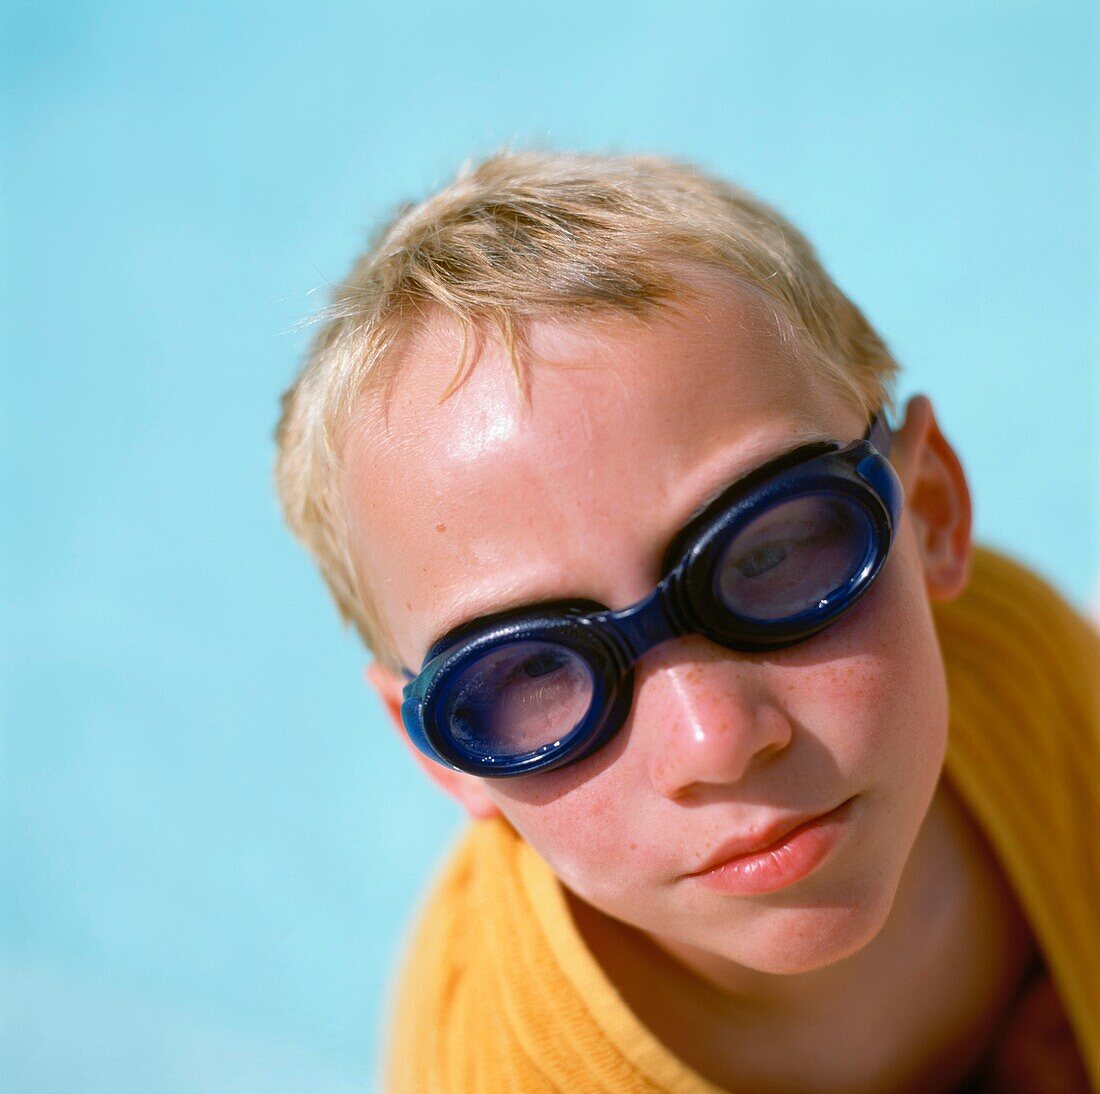 Blonde Boy In Swimming Goggles, Portrait